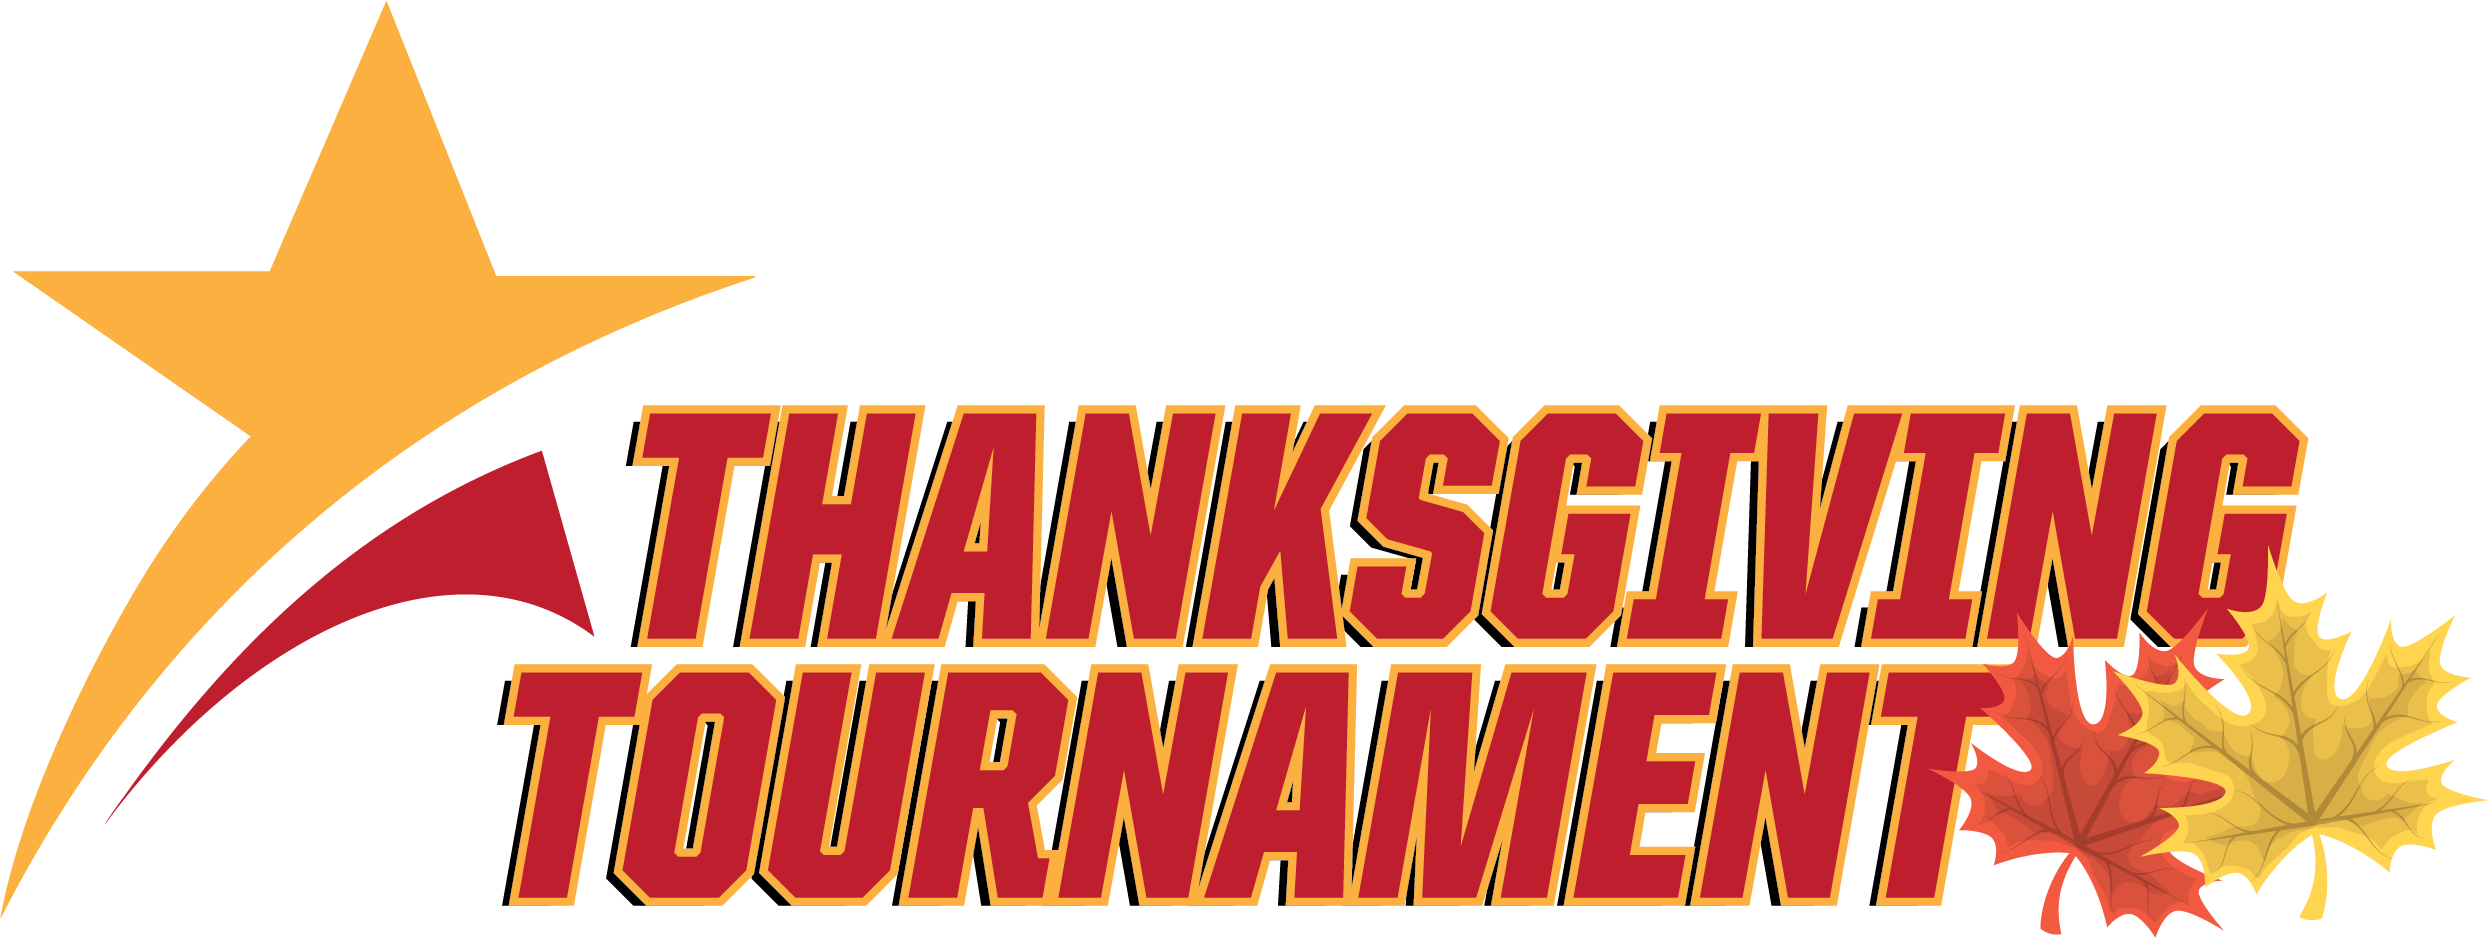 Shooting-Star-Thanksgiving-Tournament-white